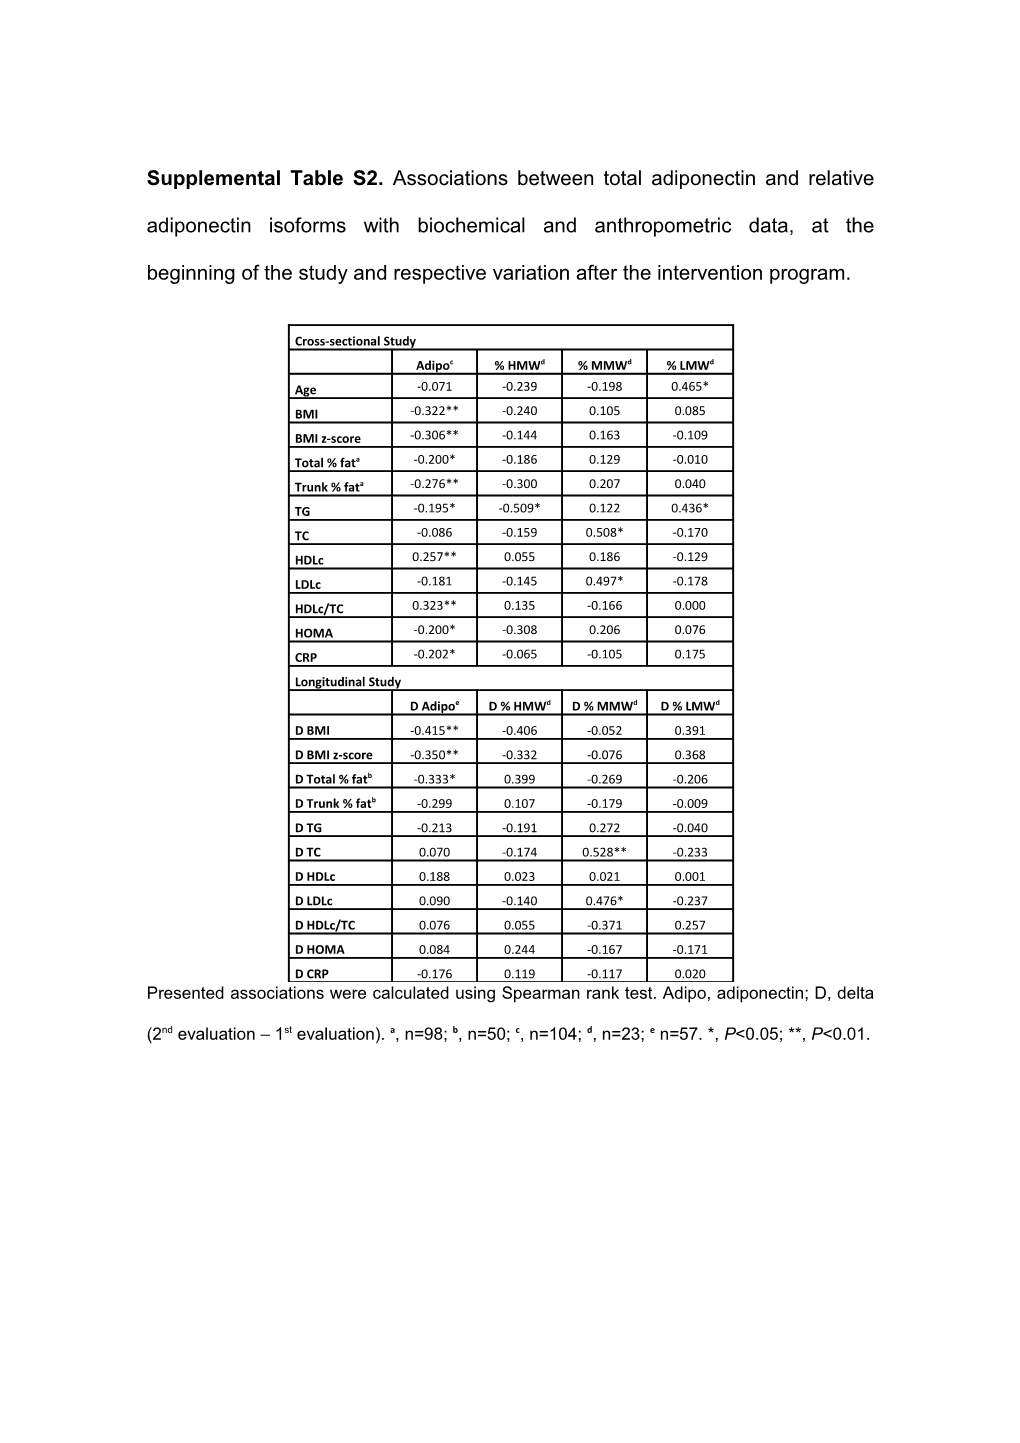 Supplemental Table S2. Associations Between Total Adiponectin and Relative Adiponectin